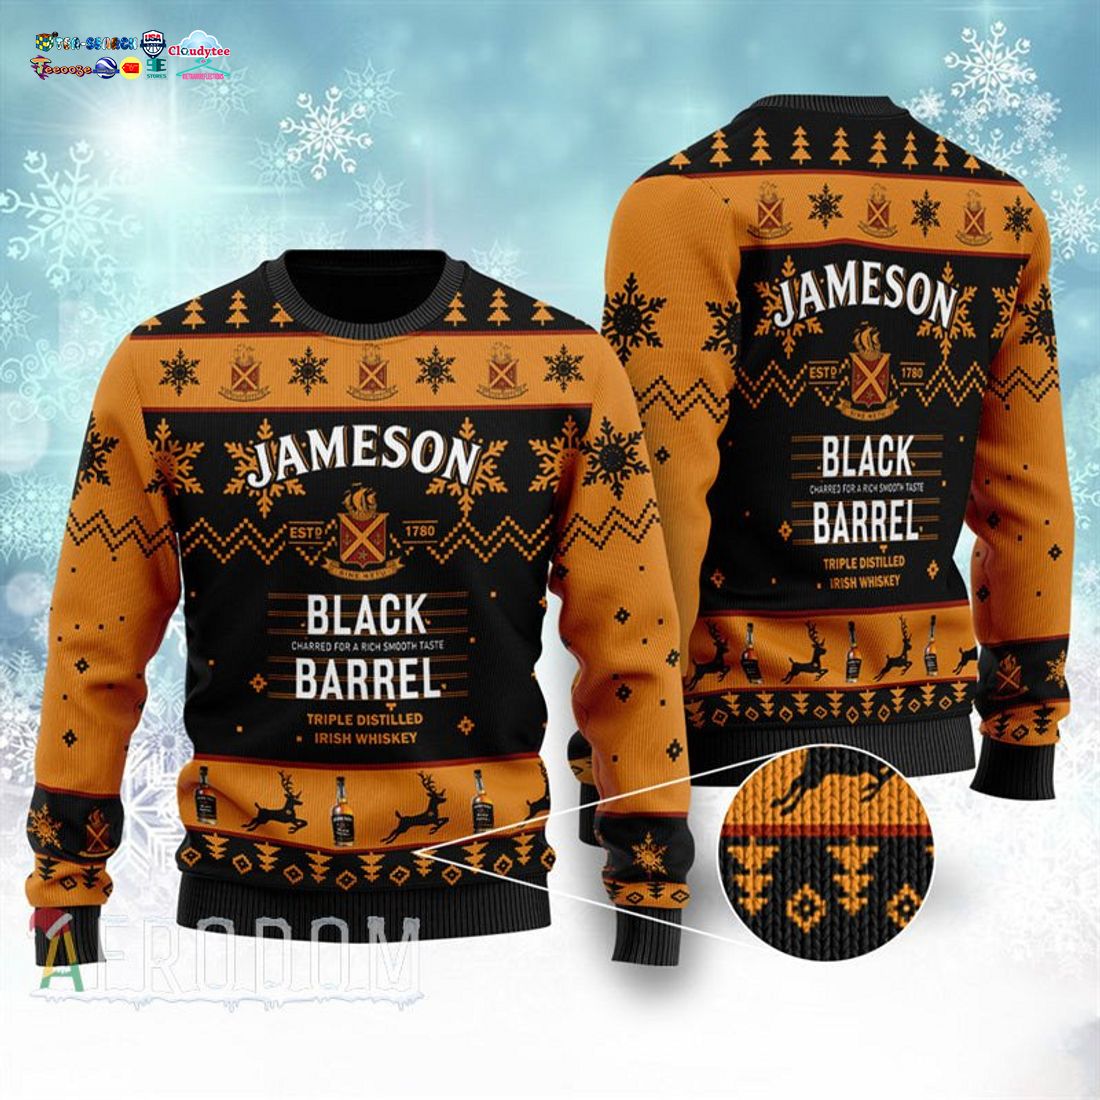 Jameson Black Barrel Ugly Christmas Sweater - Lovely smile